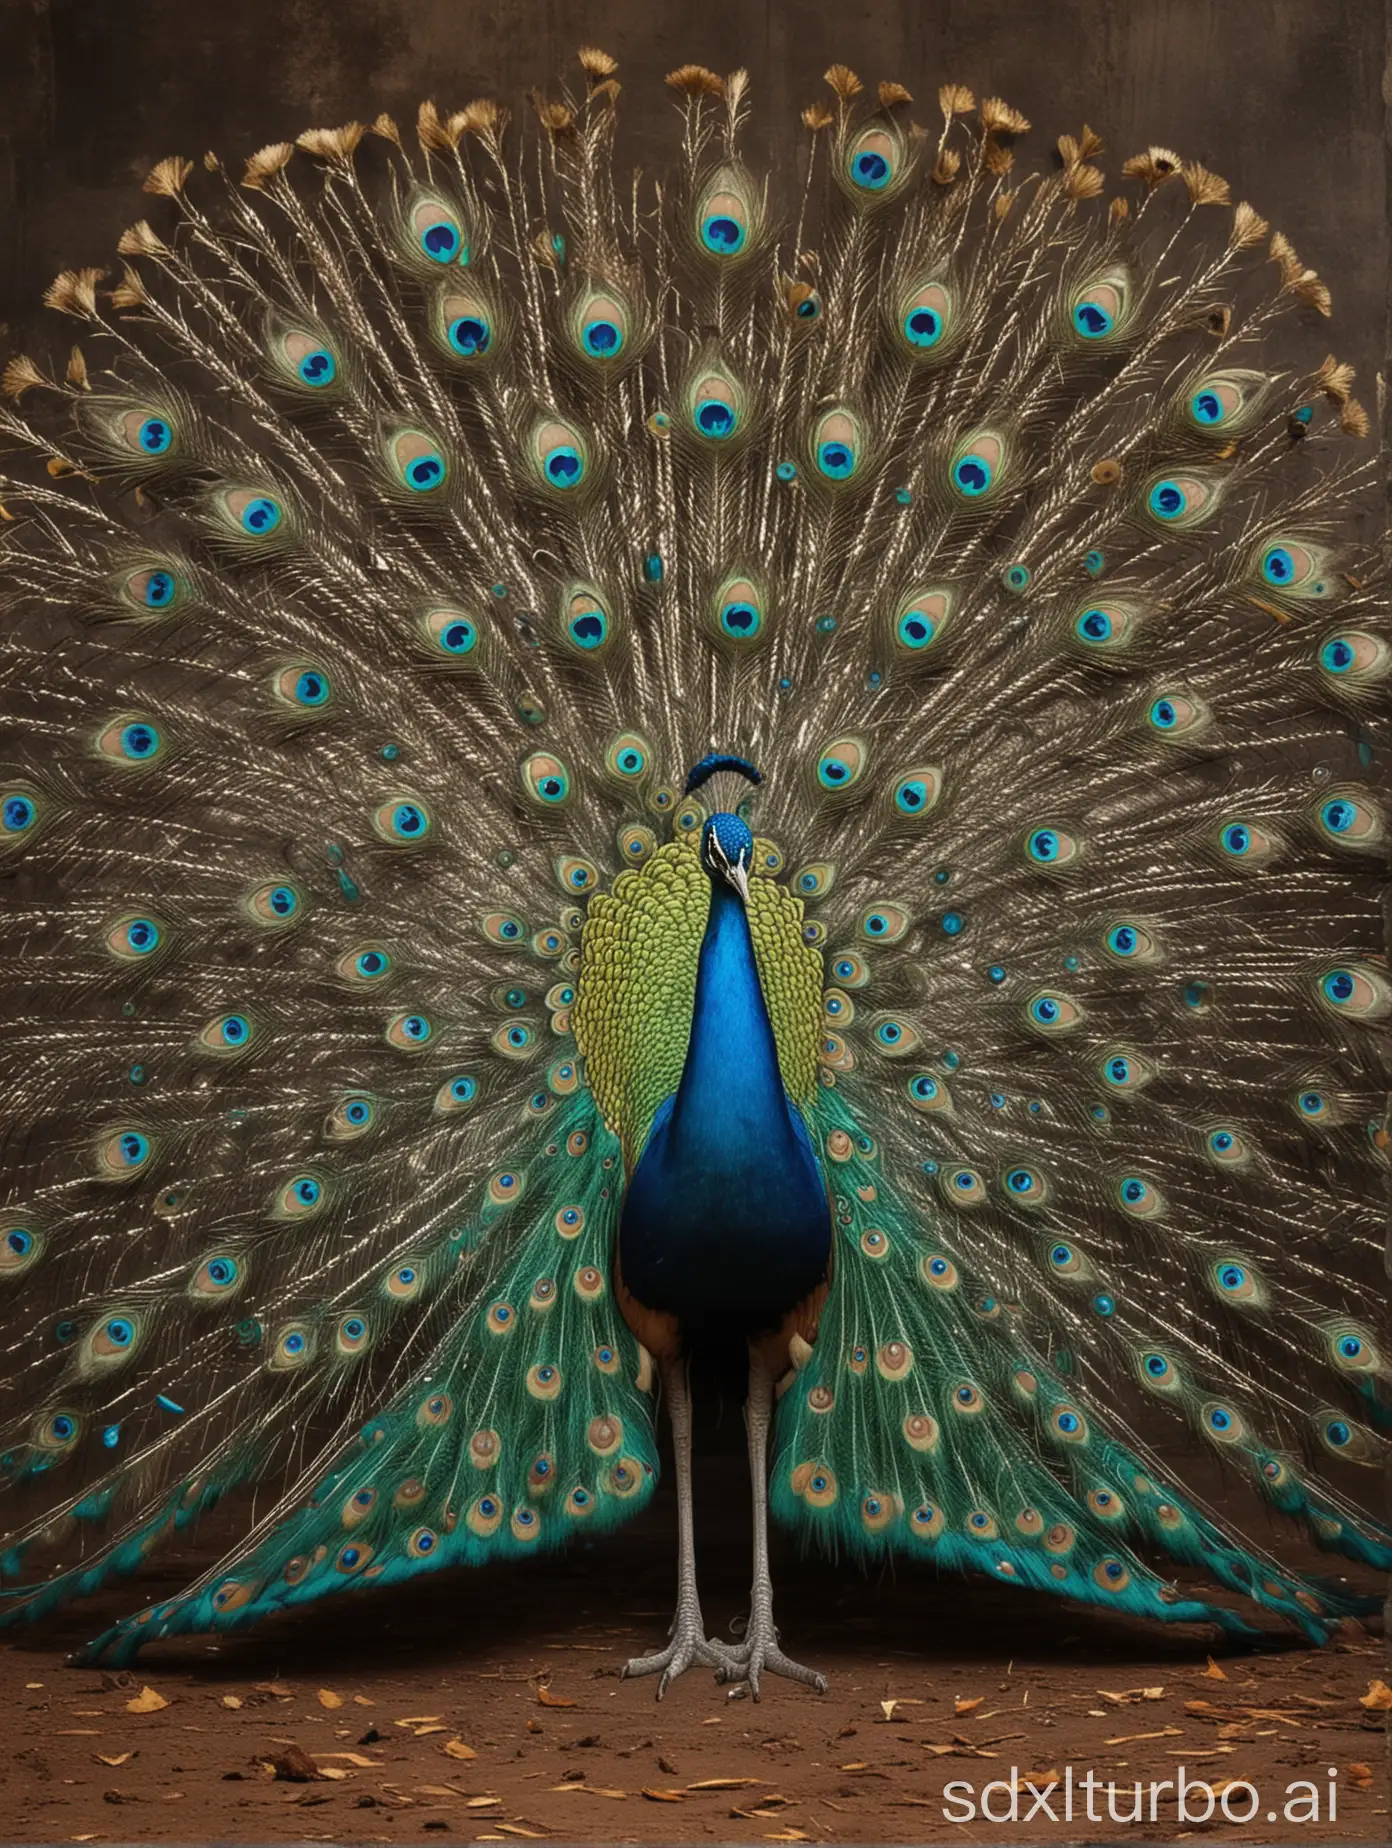 Elegant-Peacock-Against-Vibrant-Backdrop